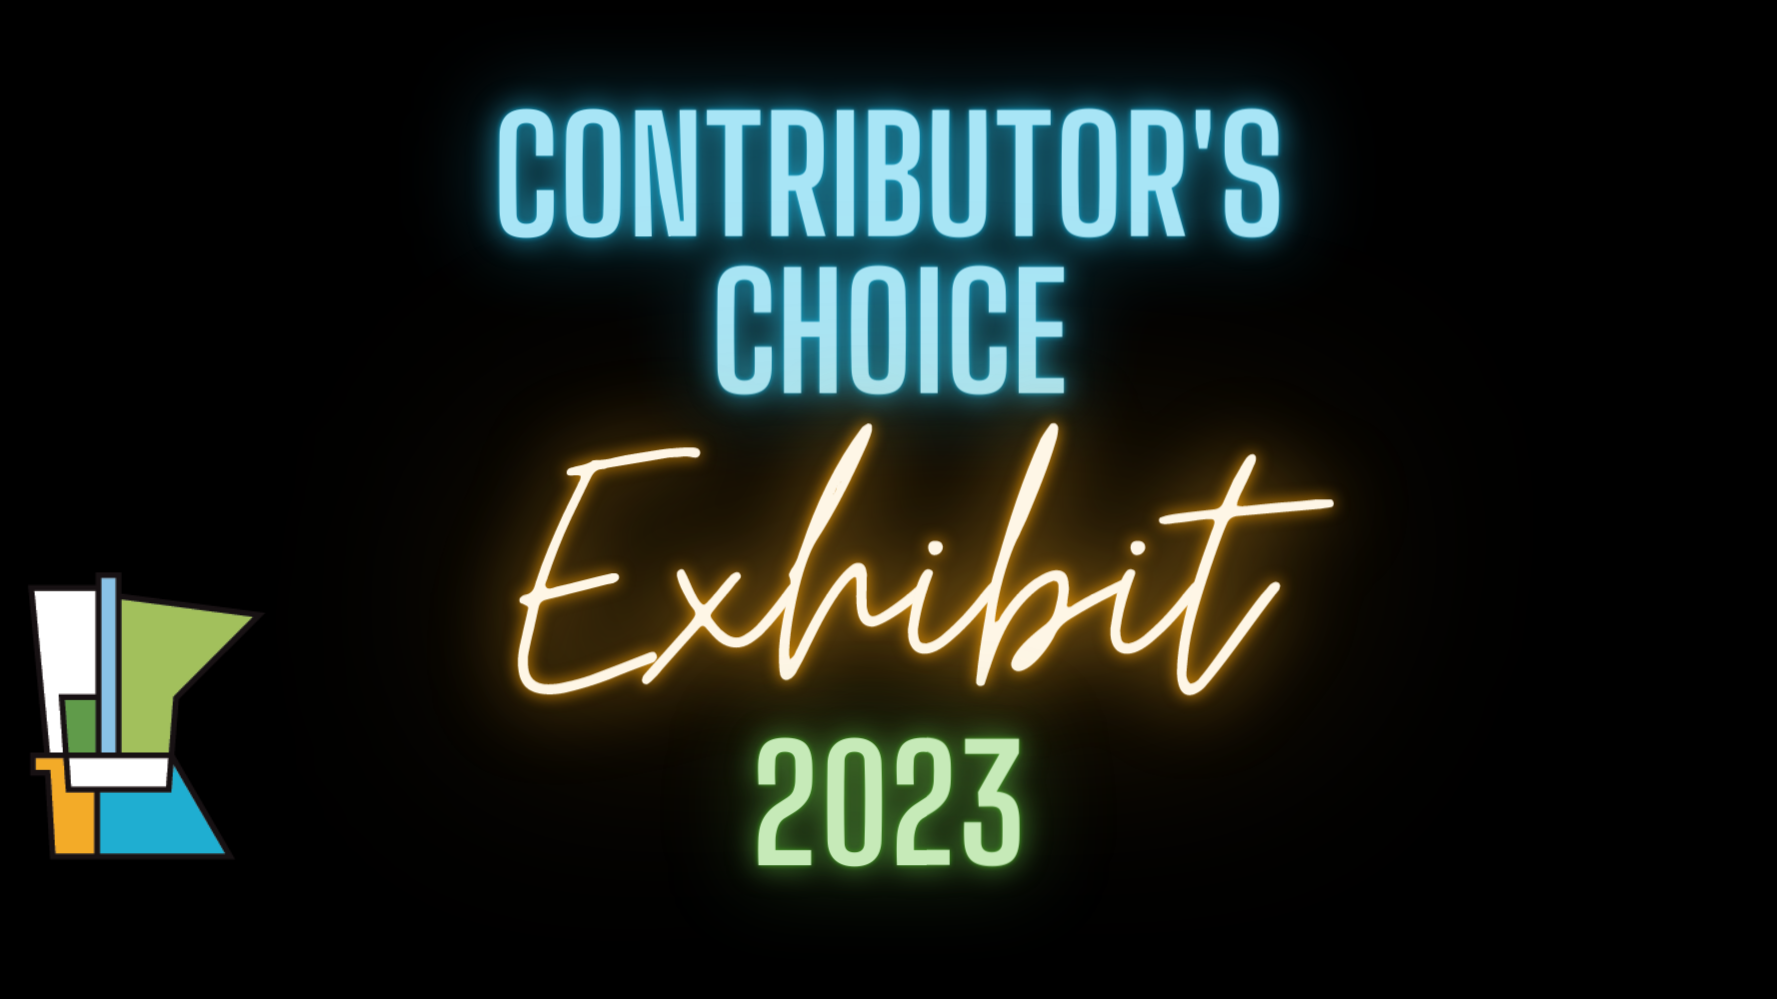 Contributor's Choice exhibit 2023 logo